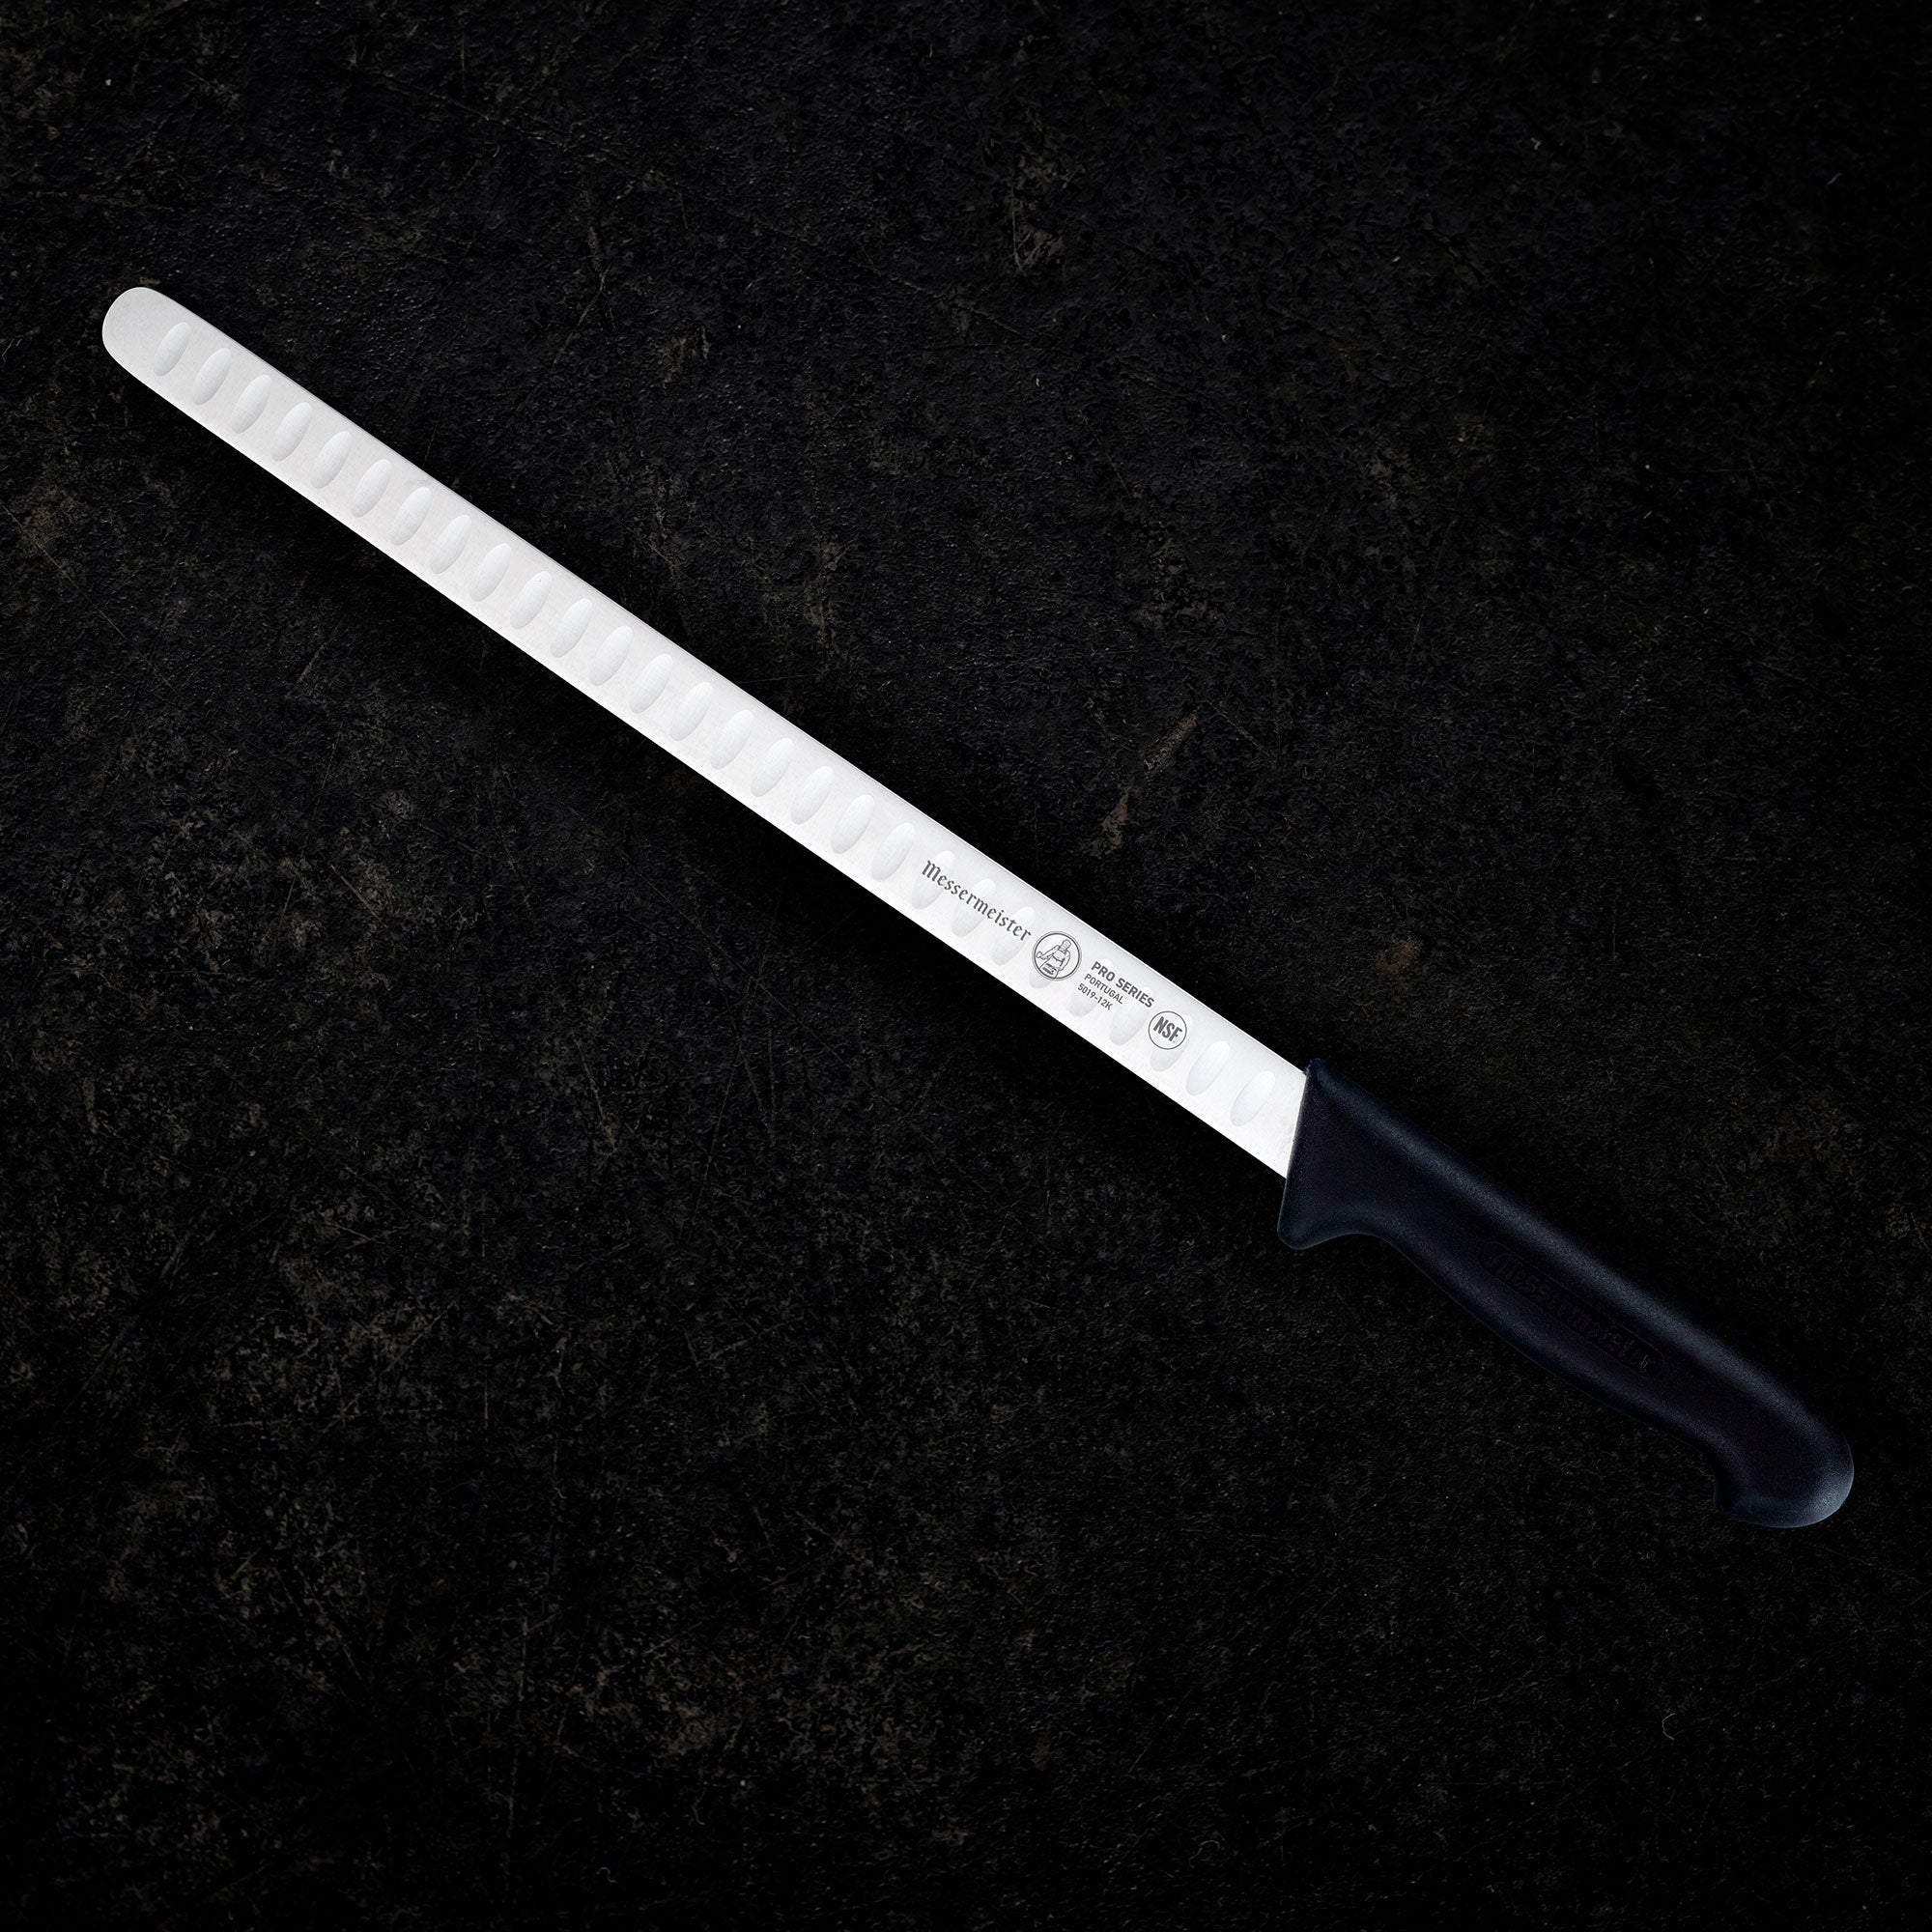 Pro Series 12 Inch Kullens Flexible Fillet Knife